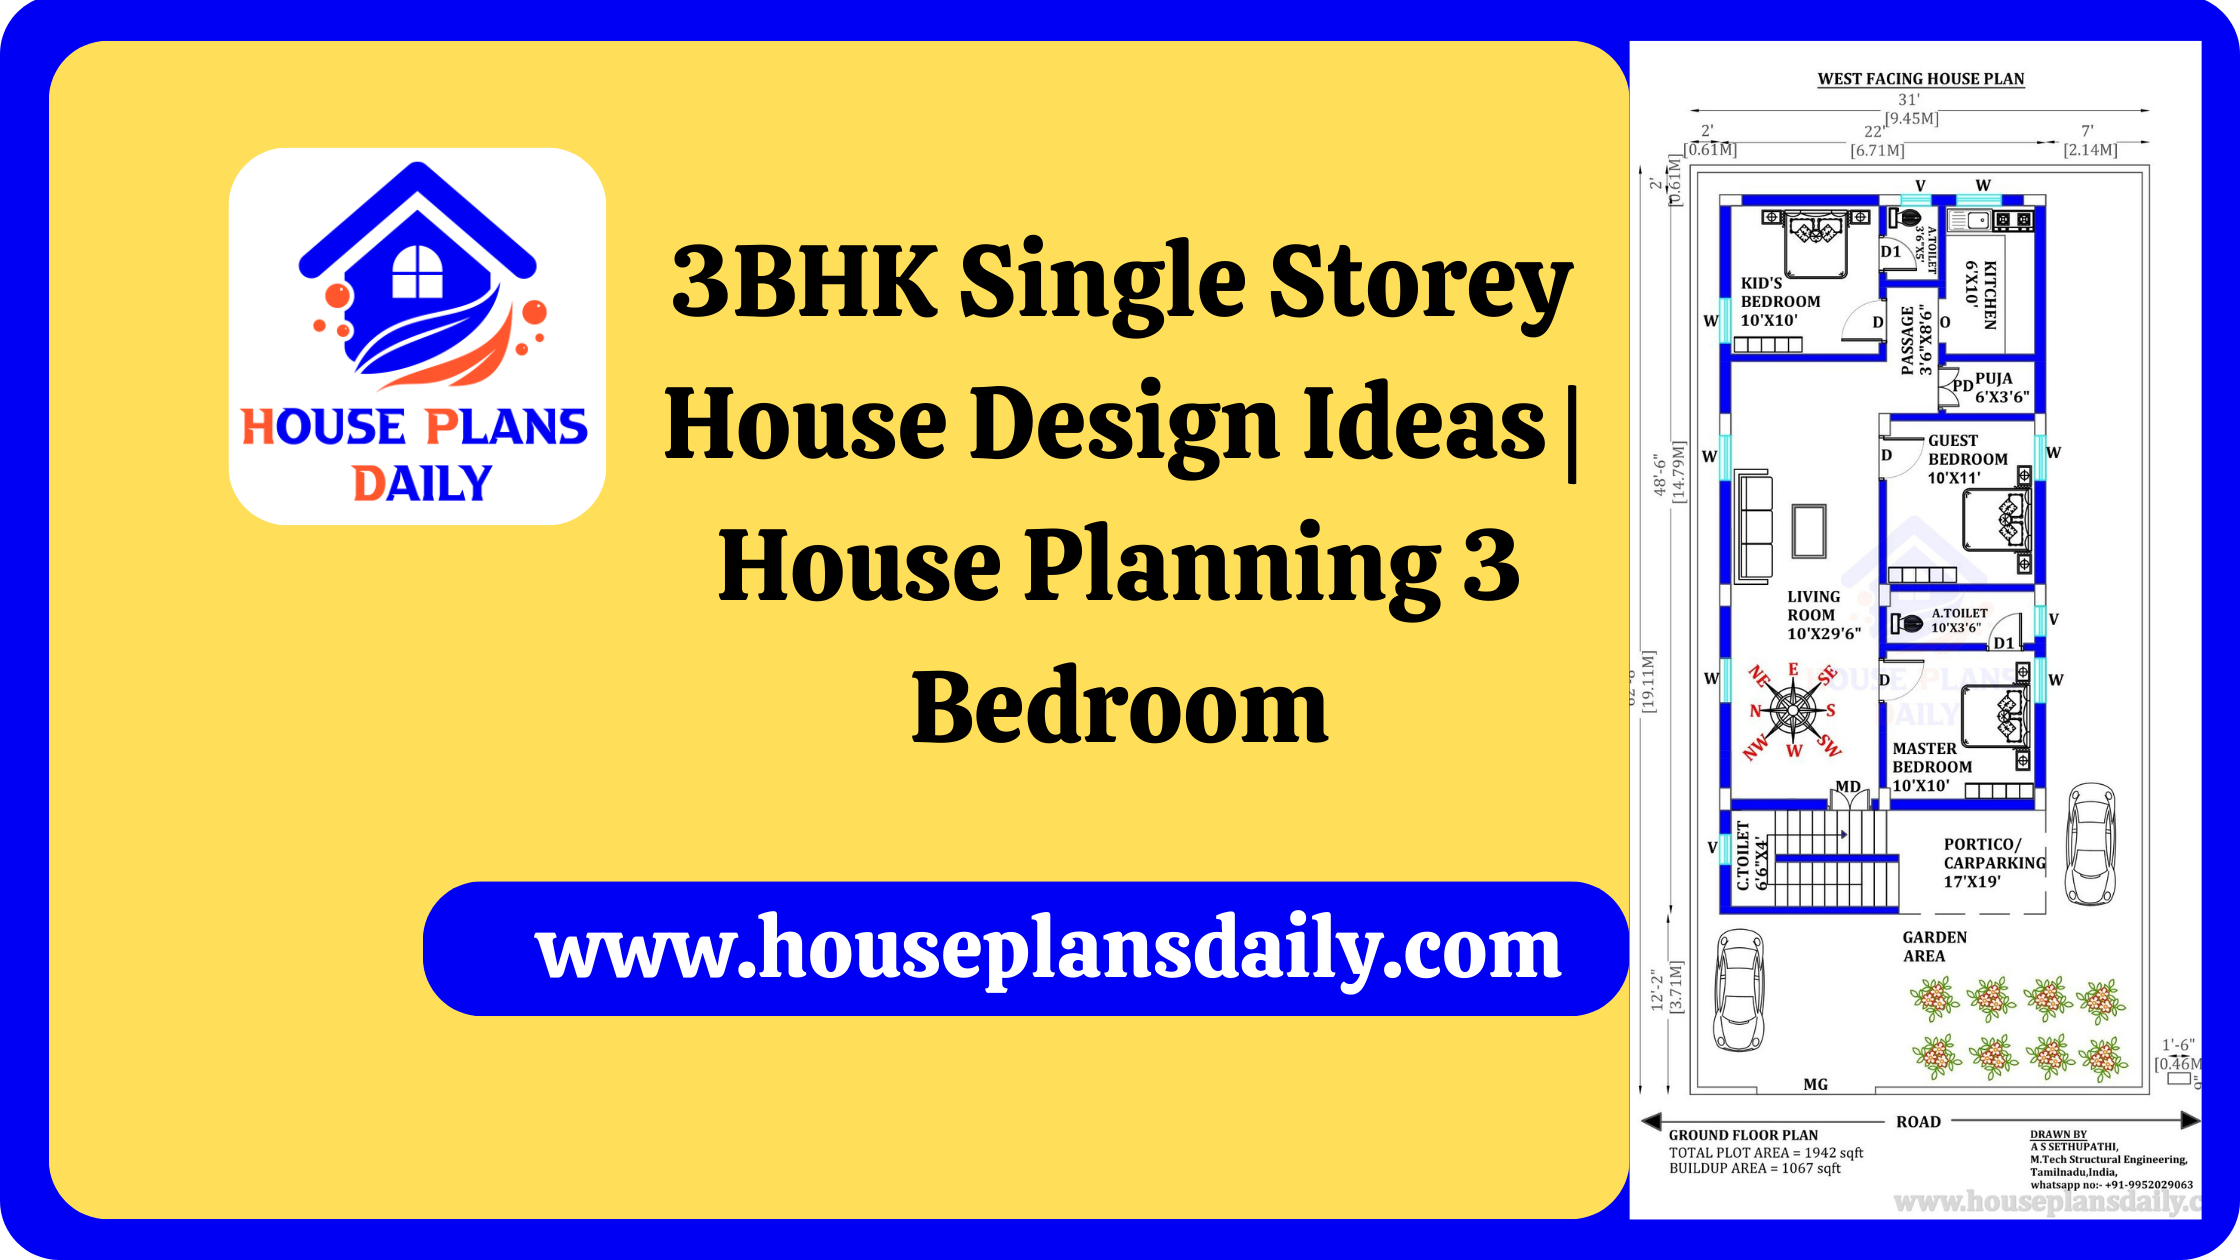 3BHK Single Storey House Design Ideas | House Planning 3 Bedroom